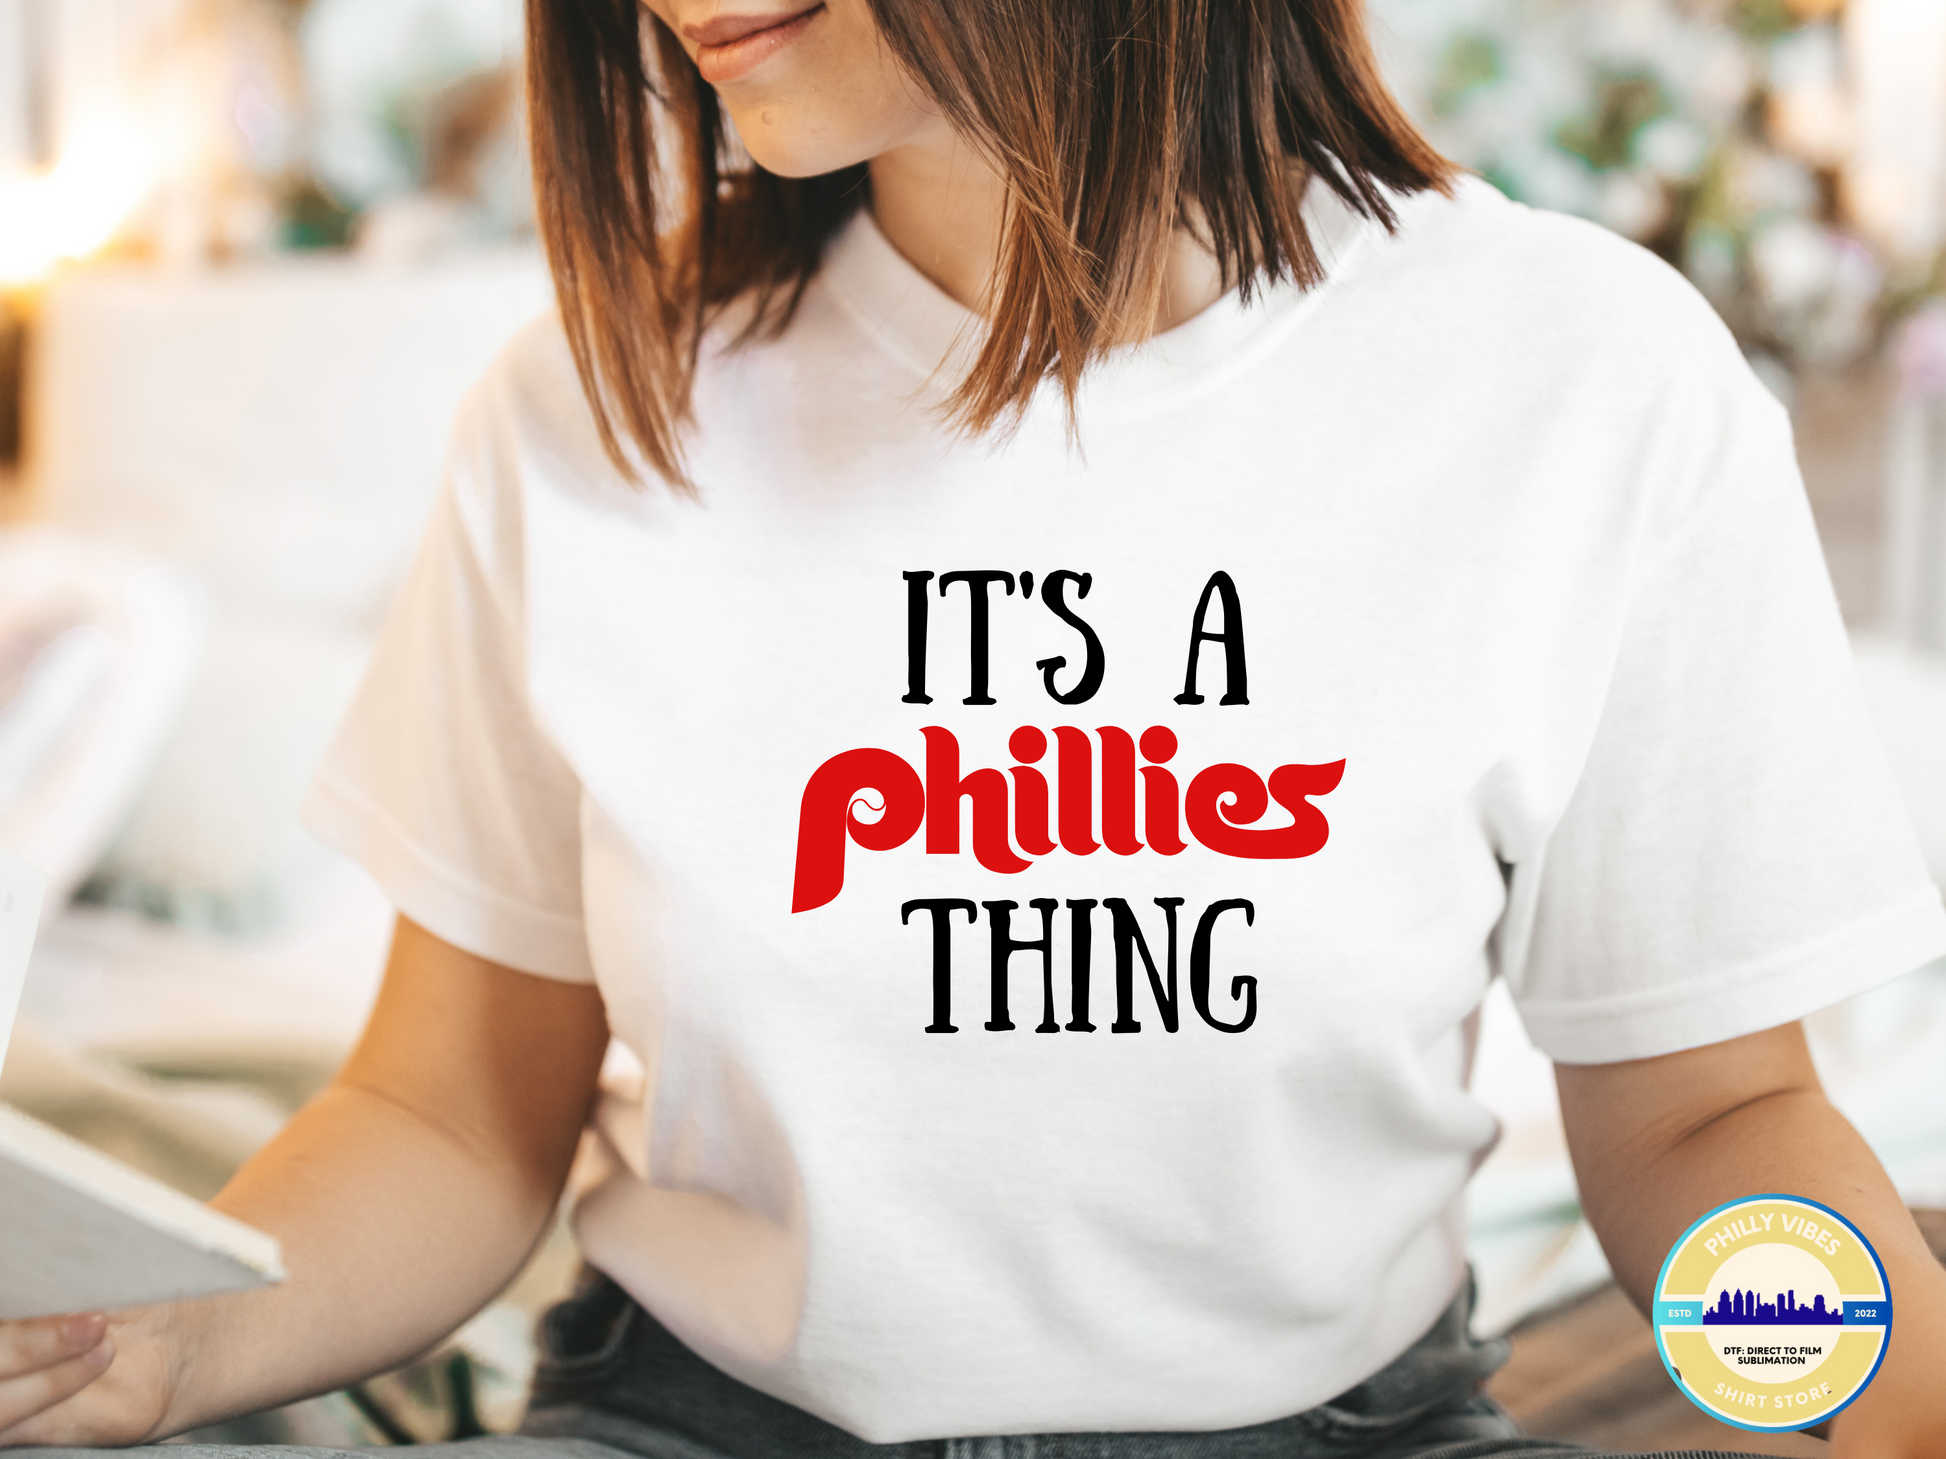 phillies shirt in store